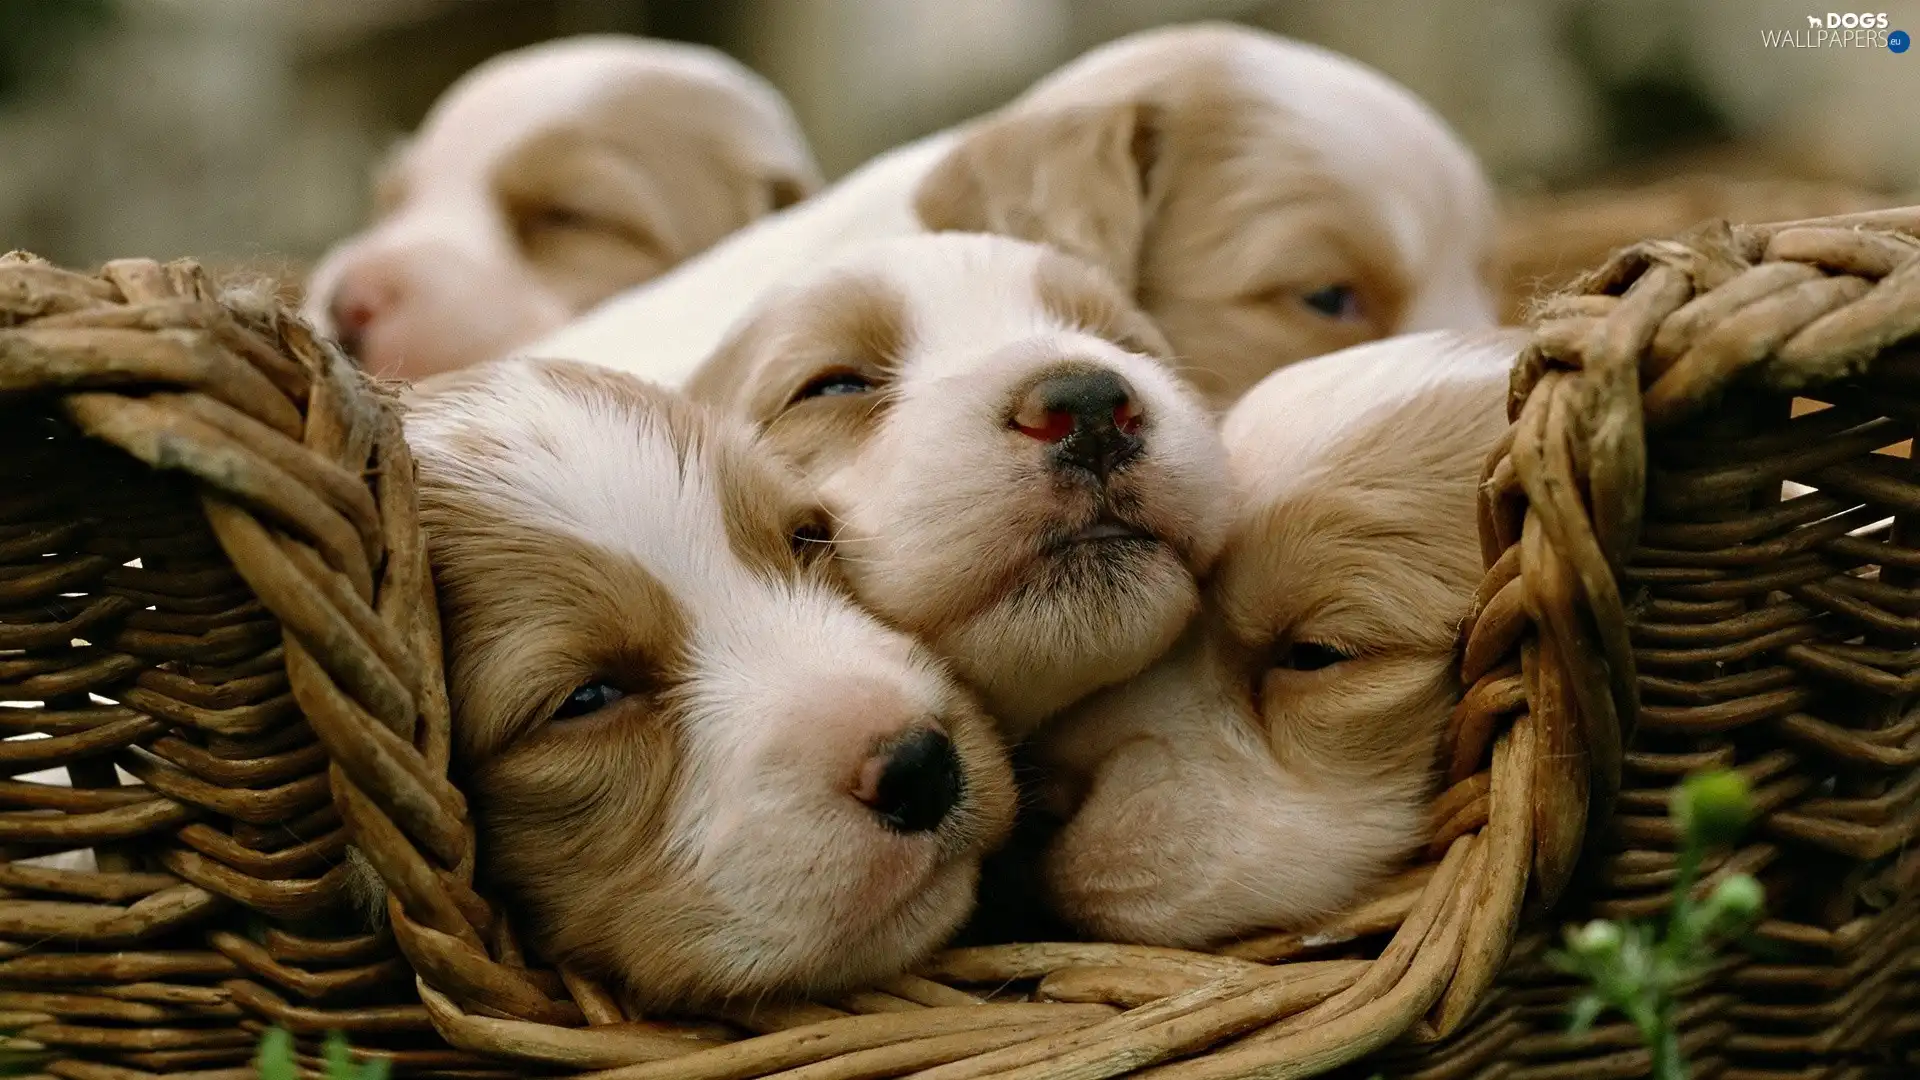 puppies, basket, Sleeping